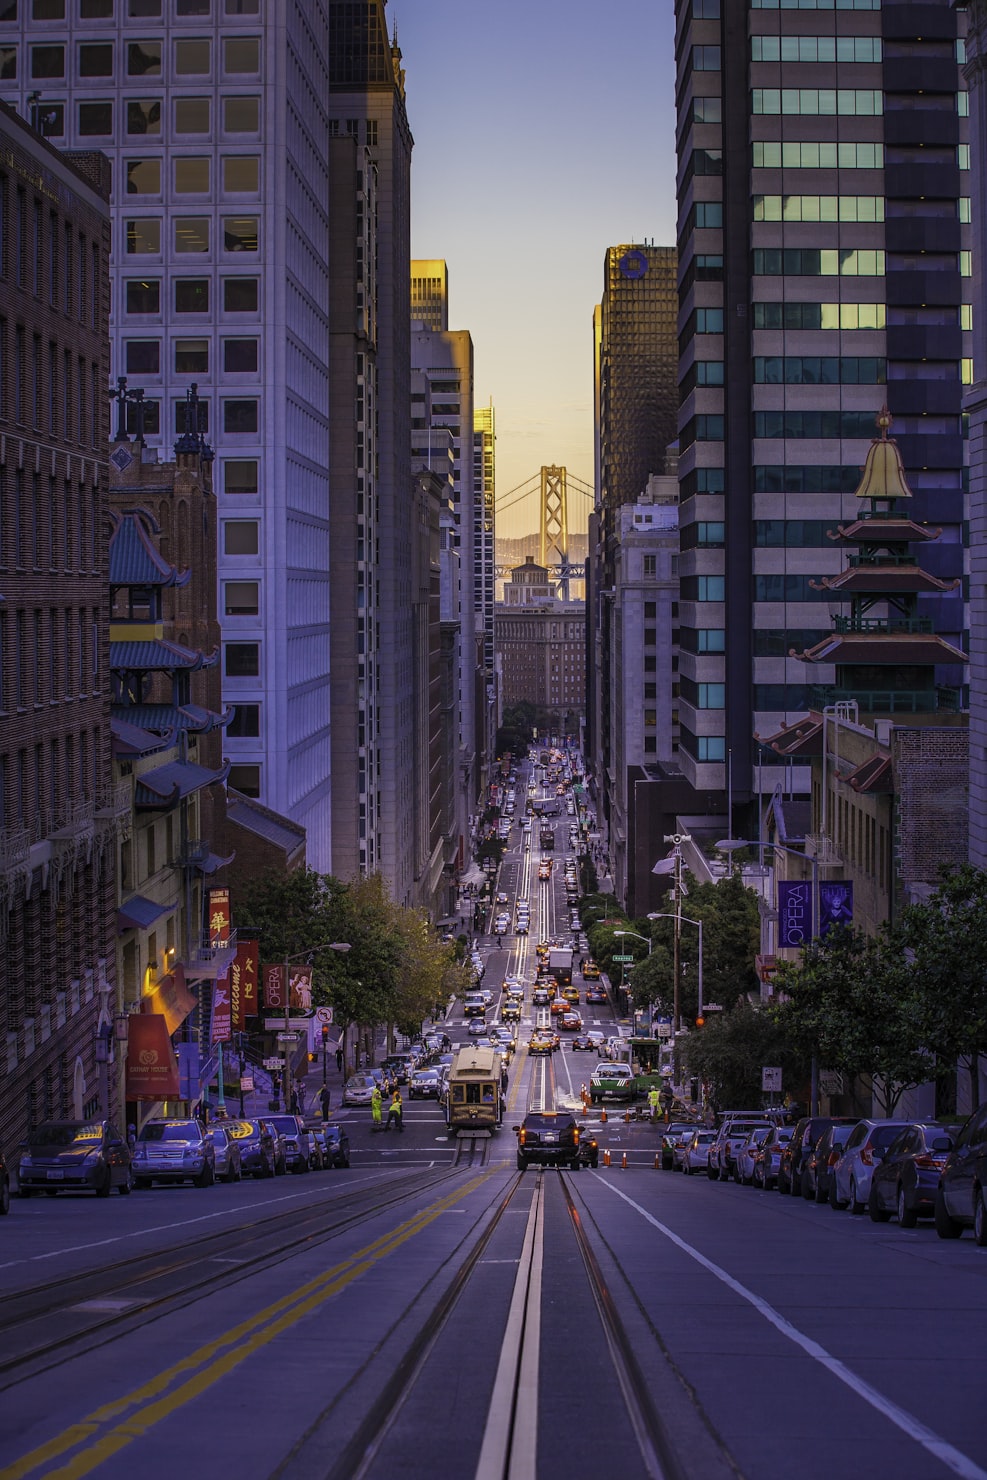 A photo of San Francisco